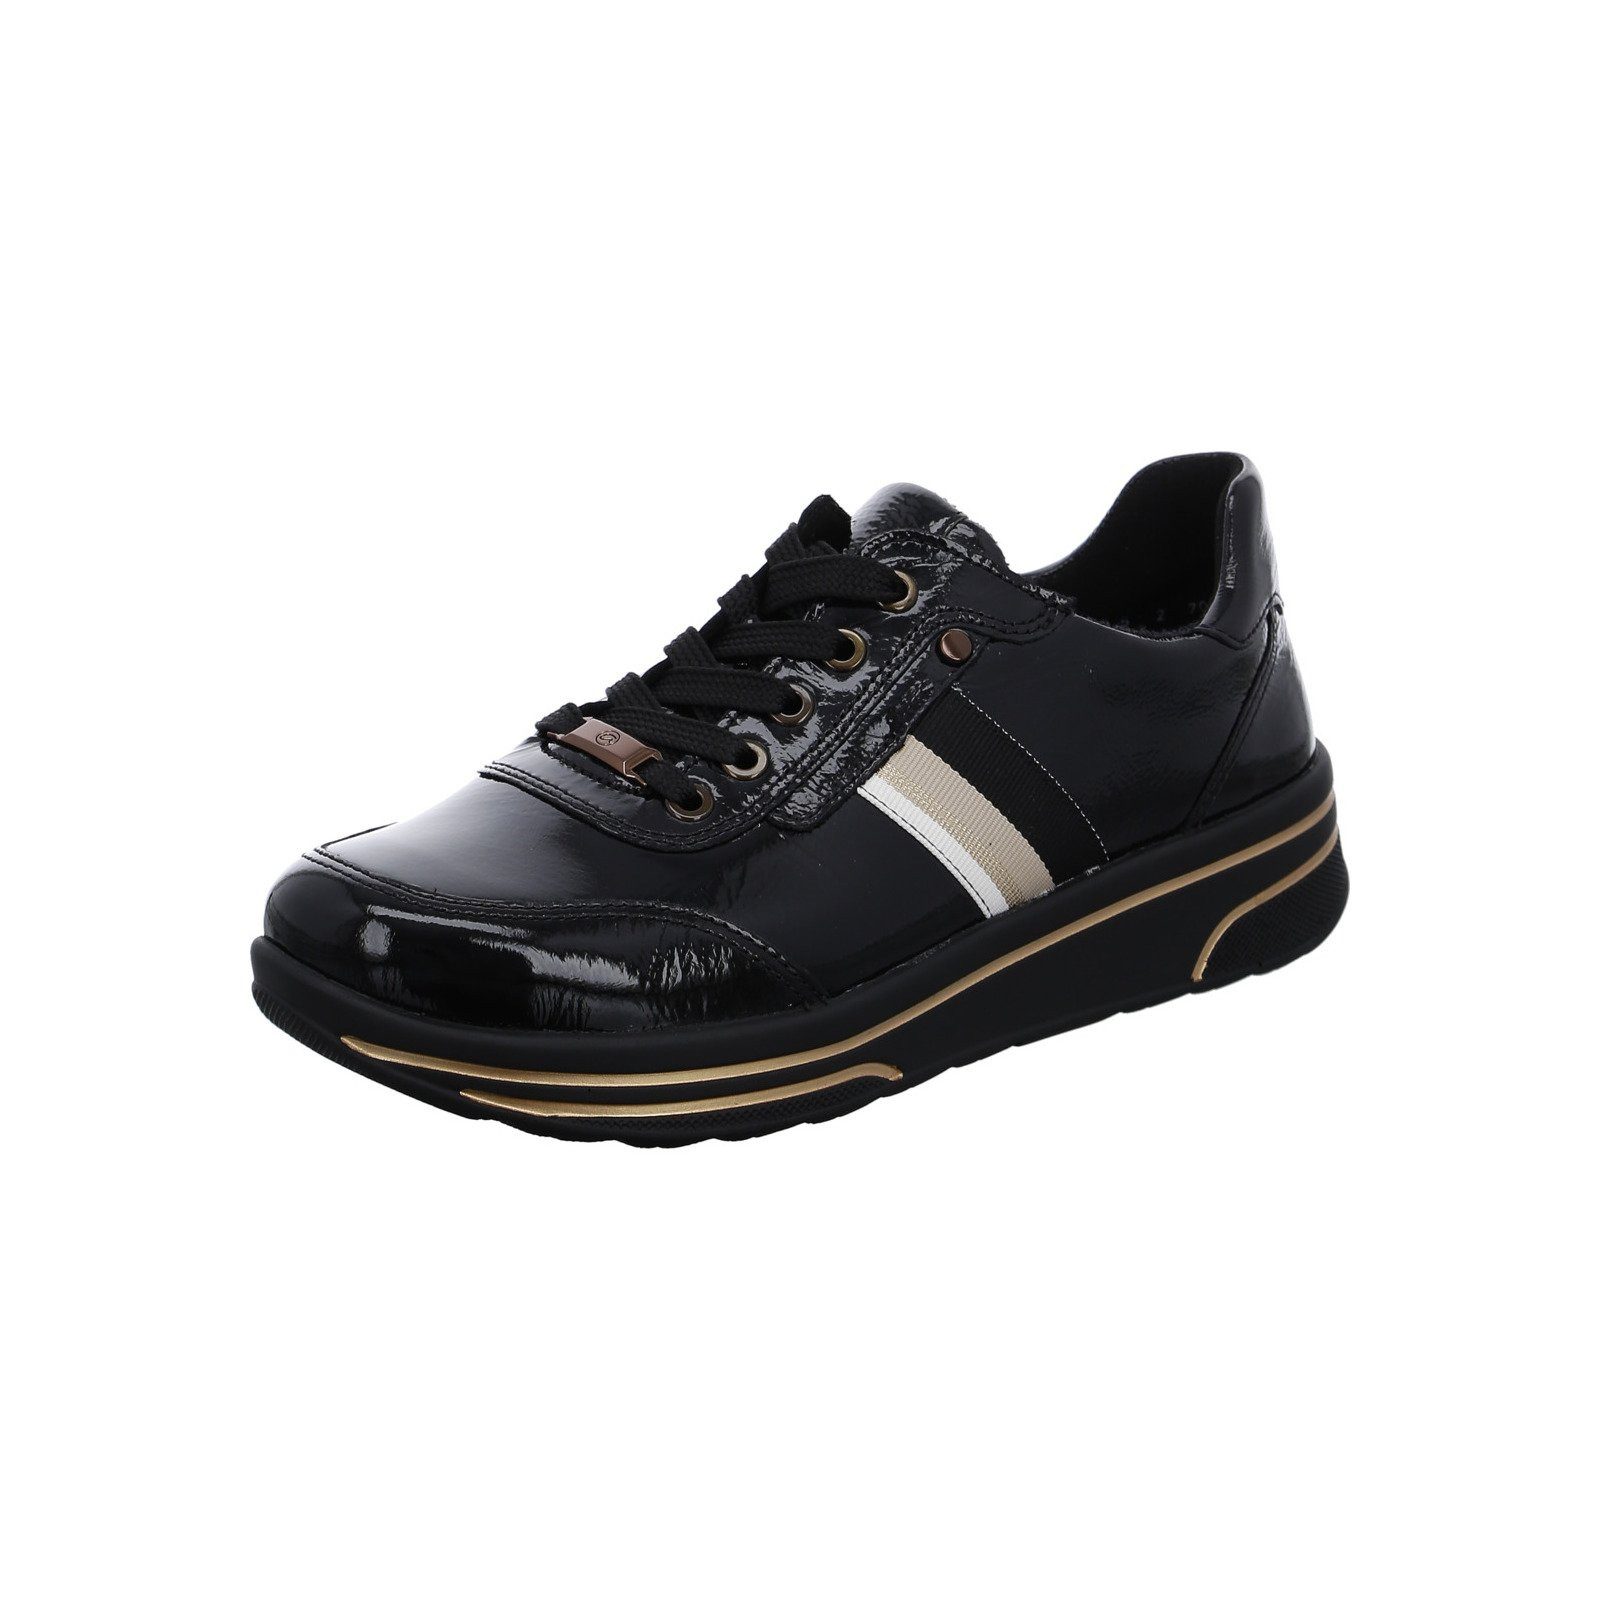 Ara Sapporo - Damen Schuhe Schnürschuh Sneaker Lackleder schwarz